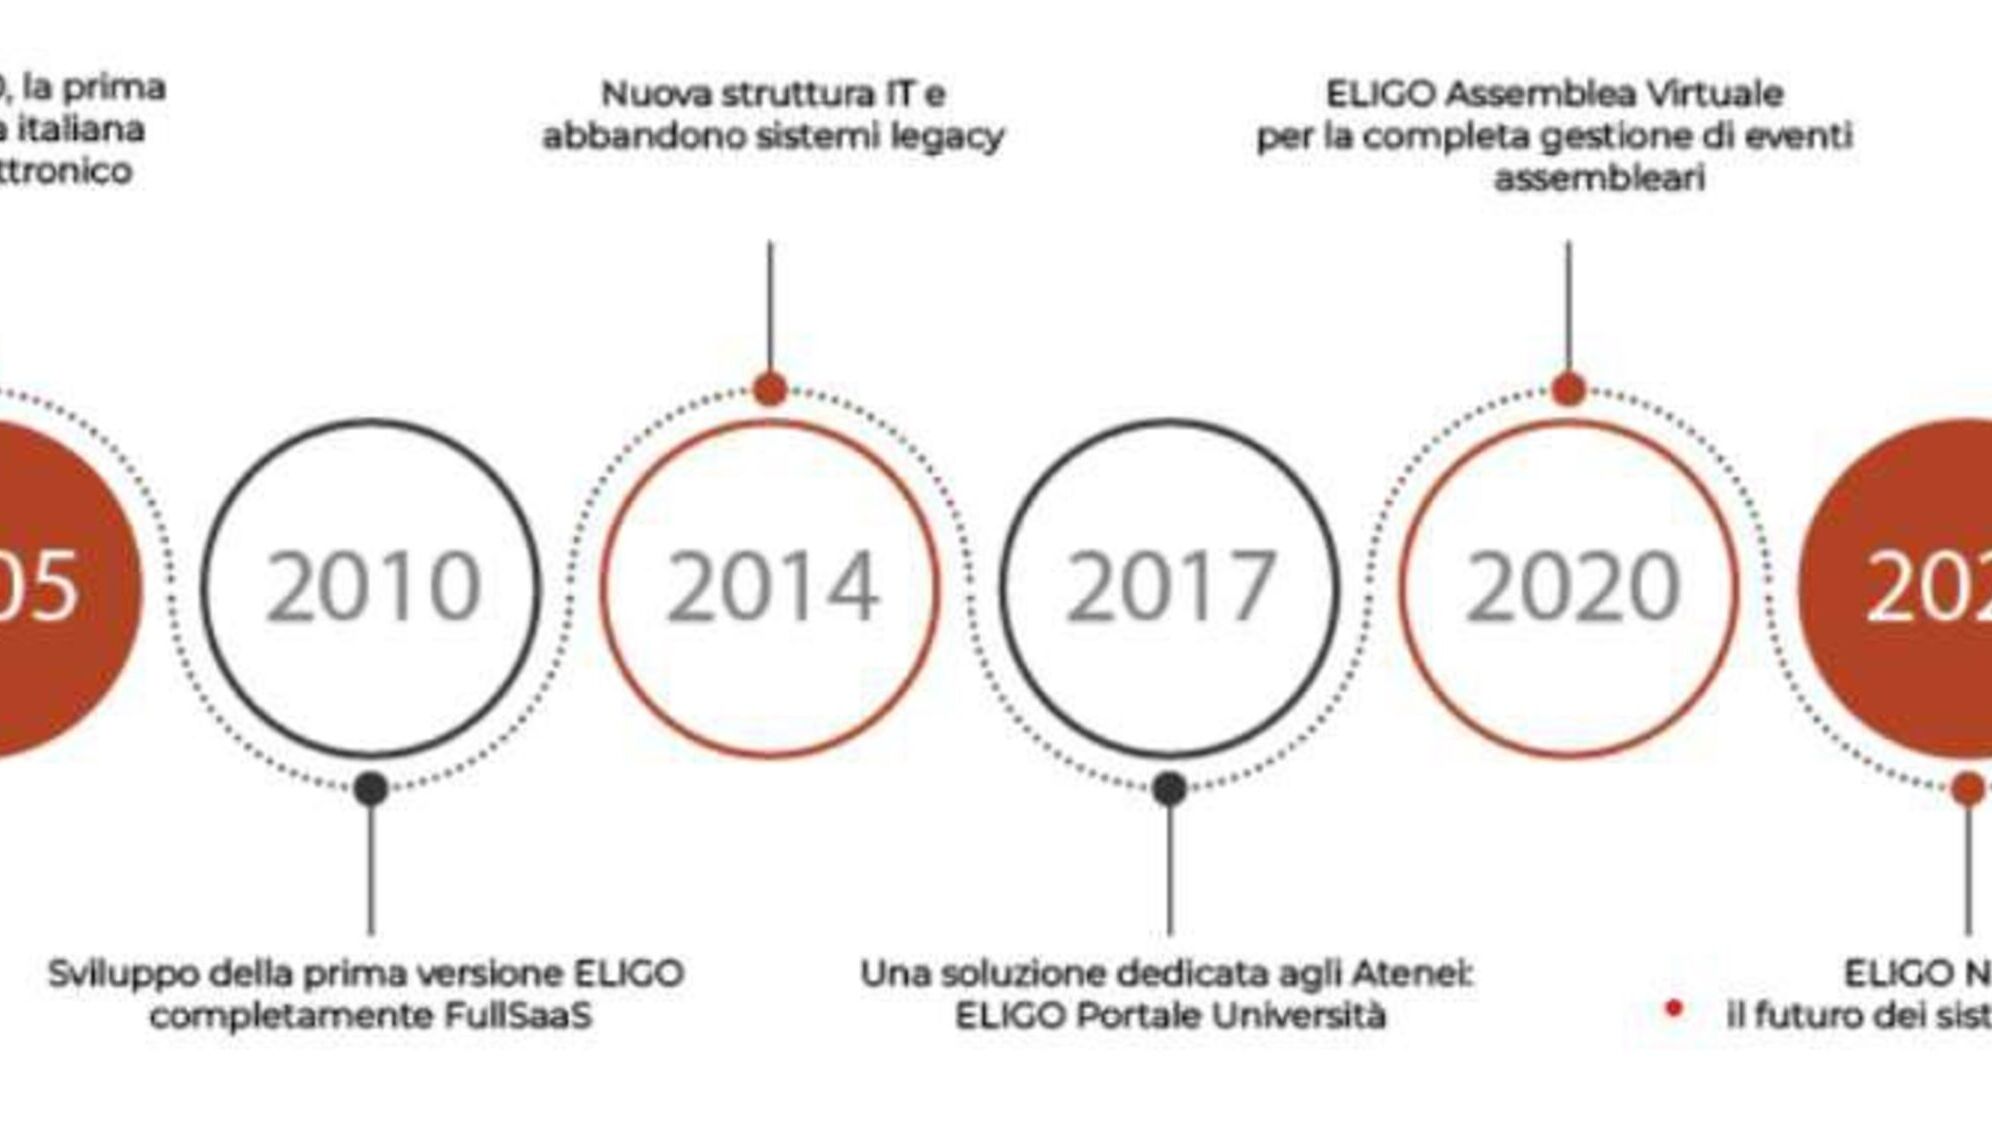 Eligo Next: اینفوگرافی جالب برگرفته از بروشور ارائه رسمی پلت فرم جدید رای گیری الکترونیکی و آنلاین Eligo Next